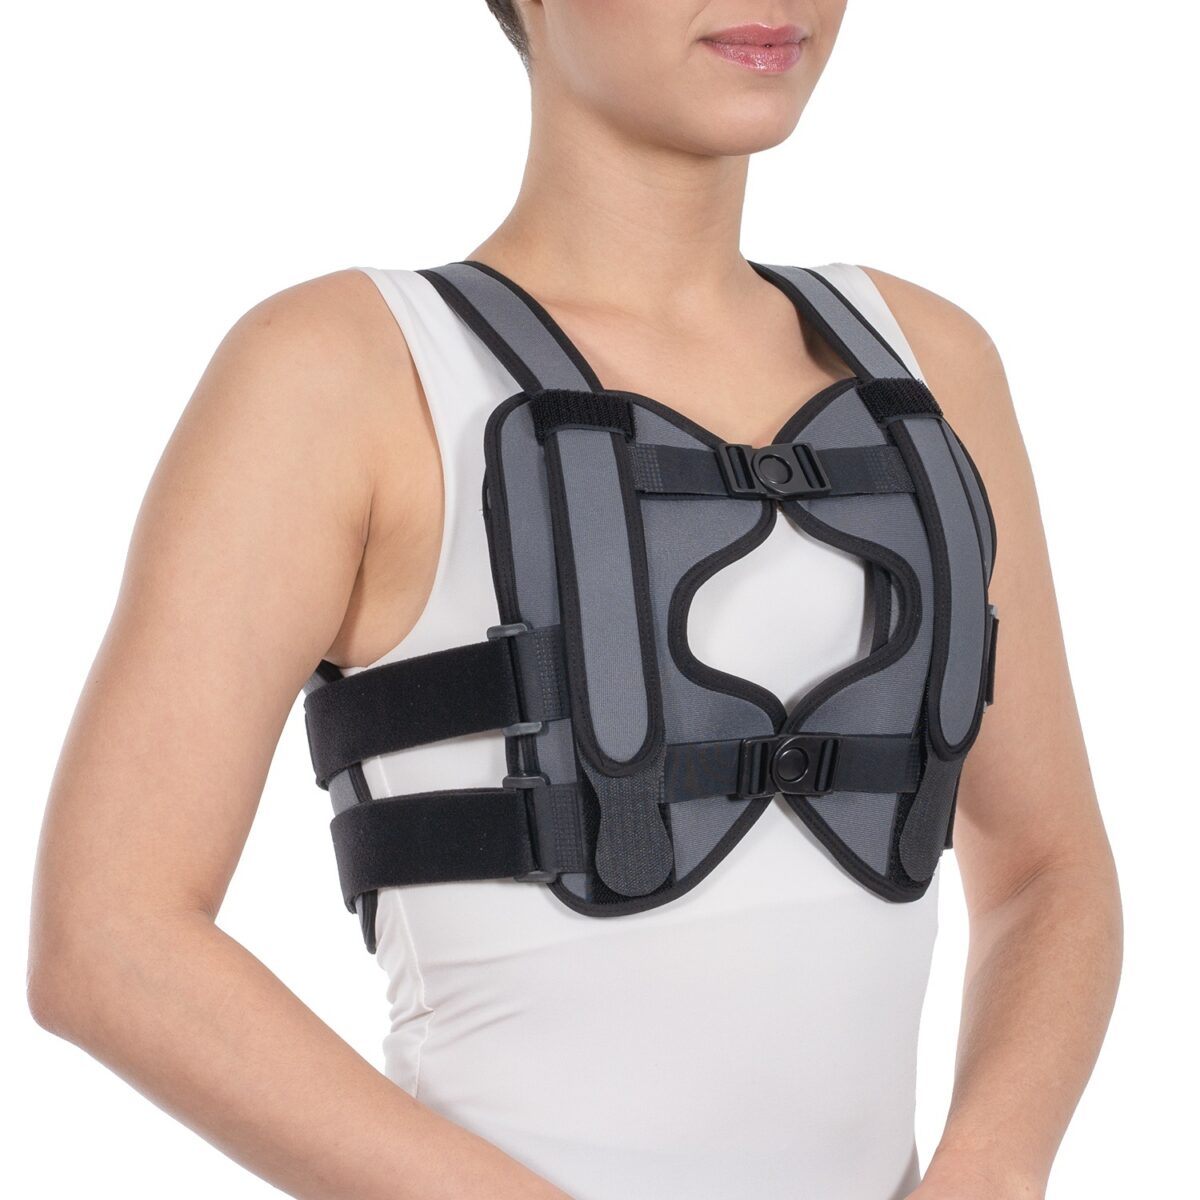 wingmed orthopedic equipments W409 uni thorax corset 03